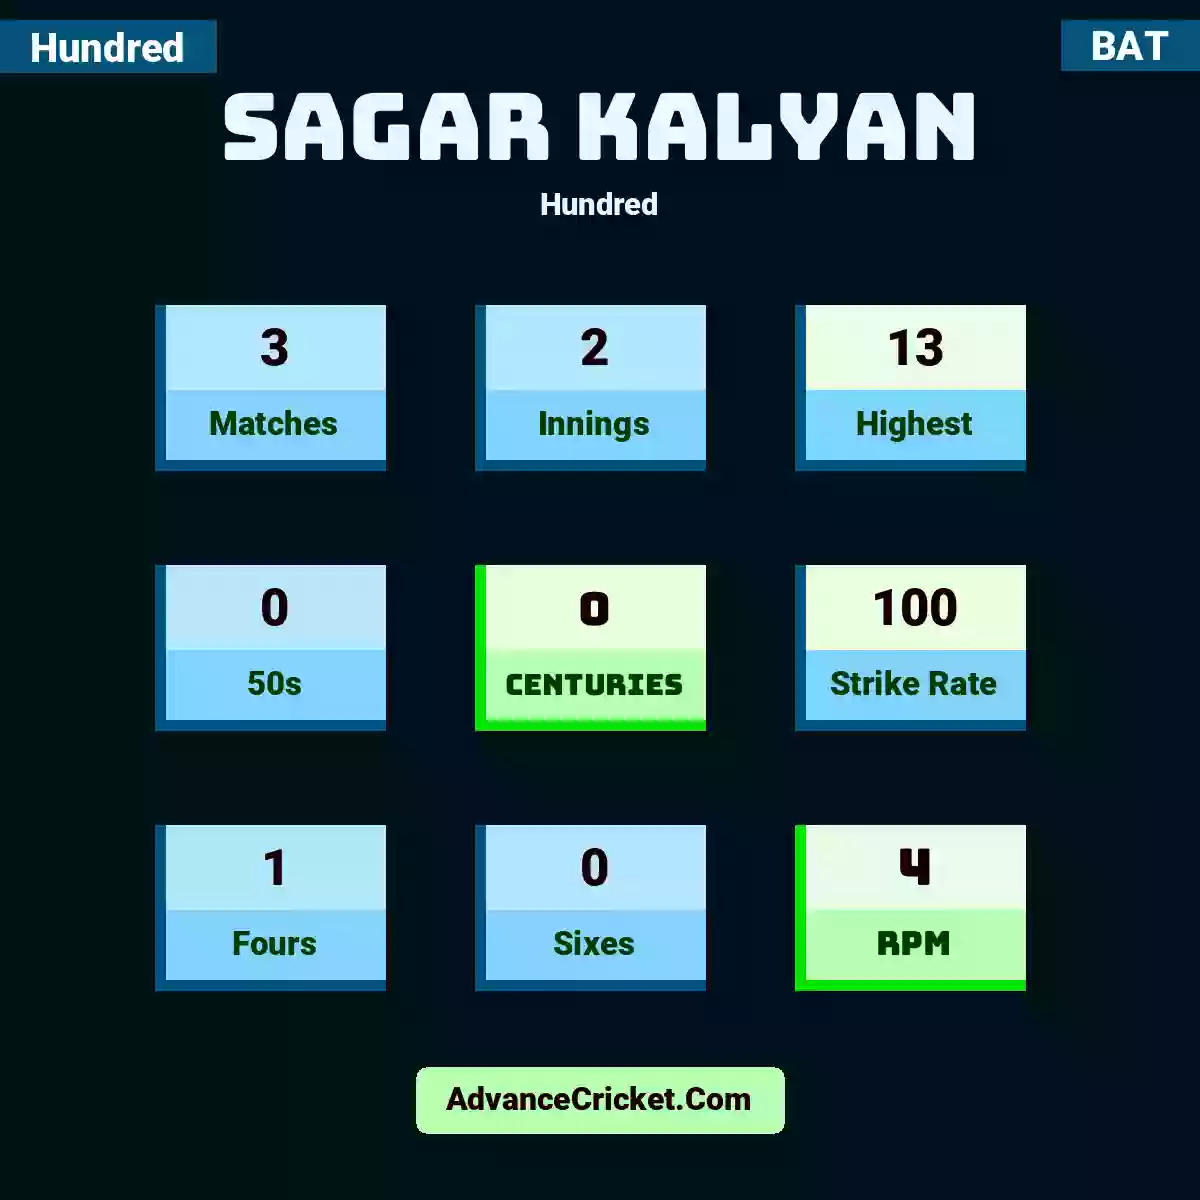 Sagar Kalyan Hundred , Sagar Kalyan played 3 matches, scored 13 runs as highest, 0 half-centuries, and 0 centuries, with a strike rate of 100. S.Kalyan hit 1 fours and 0 sixes, with an RPM of 4.